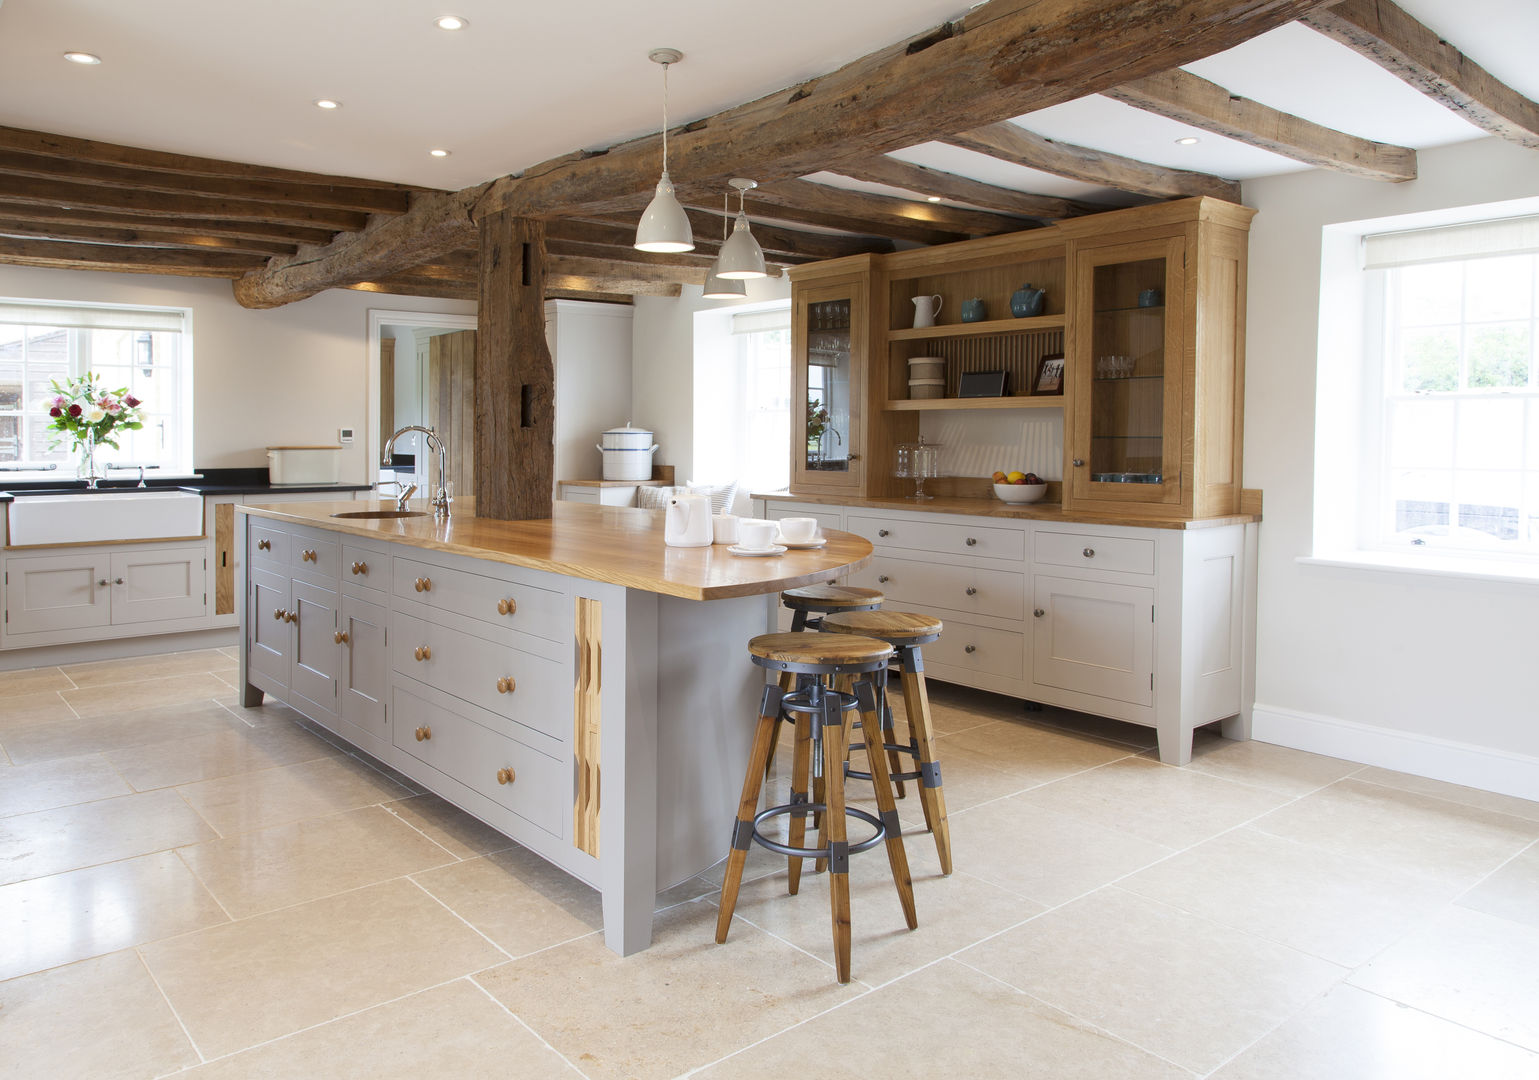 Old English - Bespoke kitchen project in Cambridgeshire Baker & Baker Cucina in stile rustico dresser,kitchen island,seating,tile flooring,beams,lighting